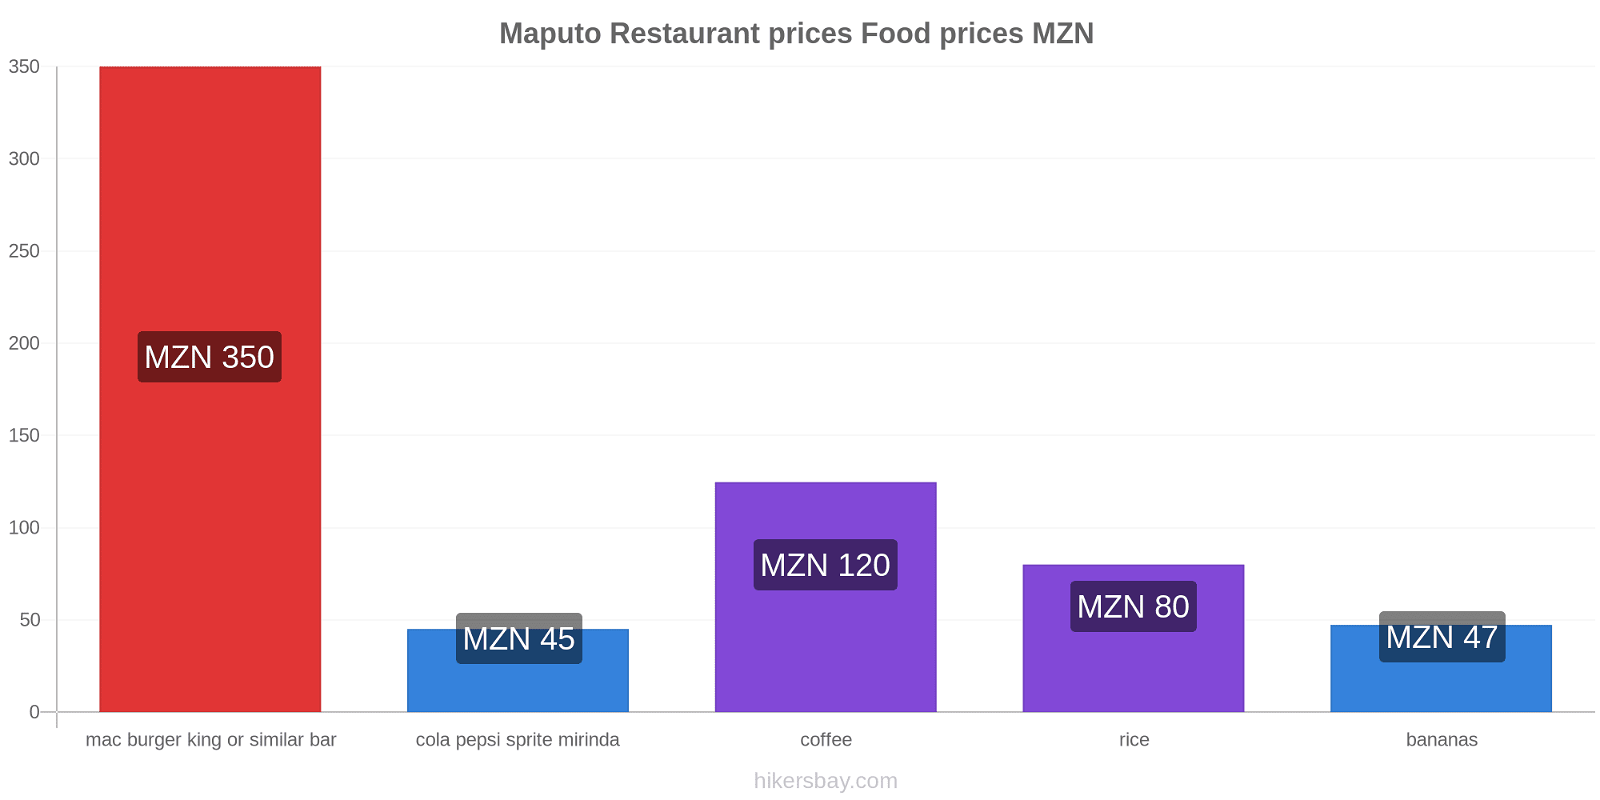 Maputo price changes hikersbay.com